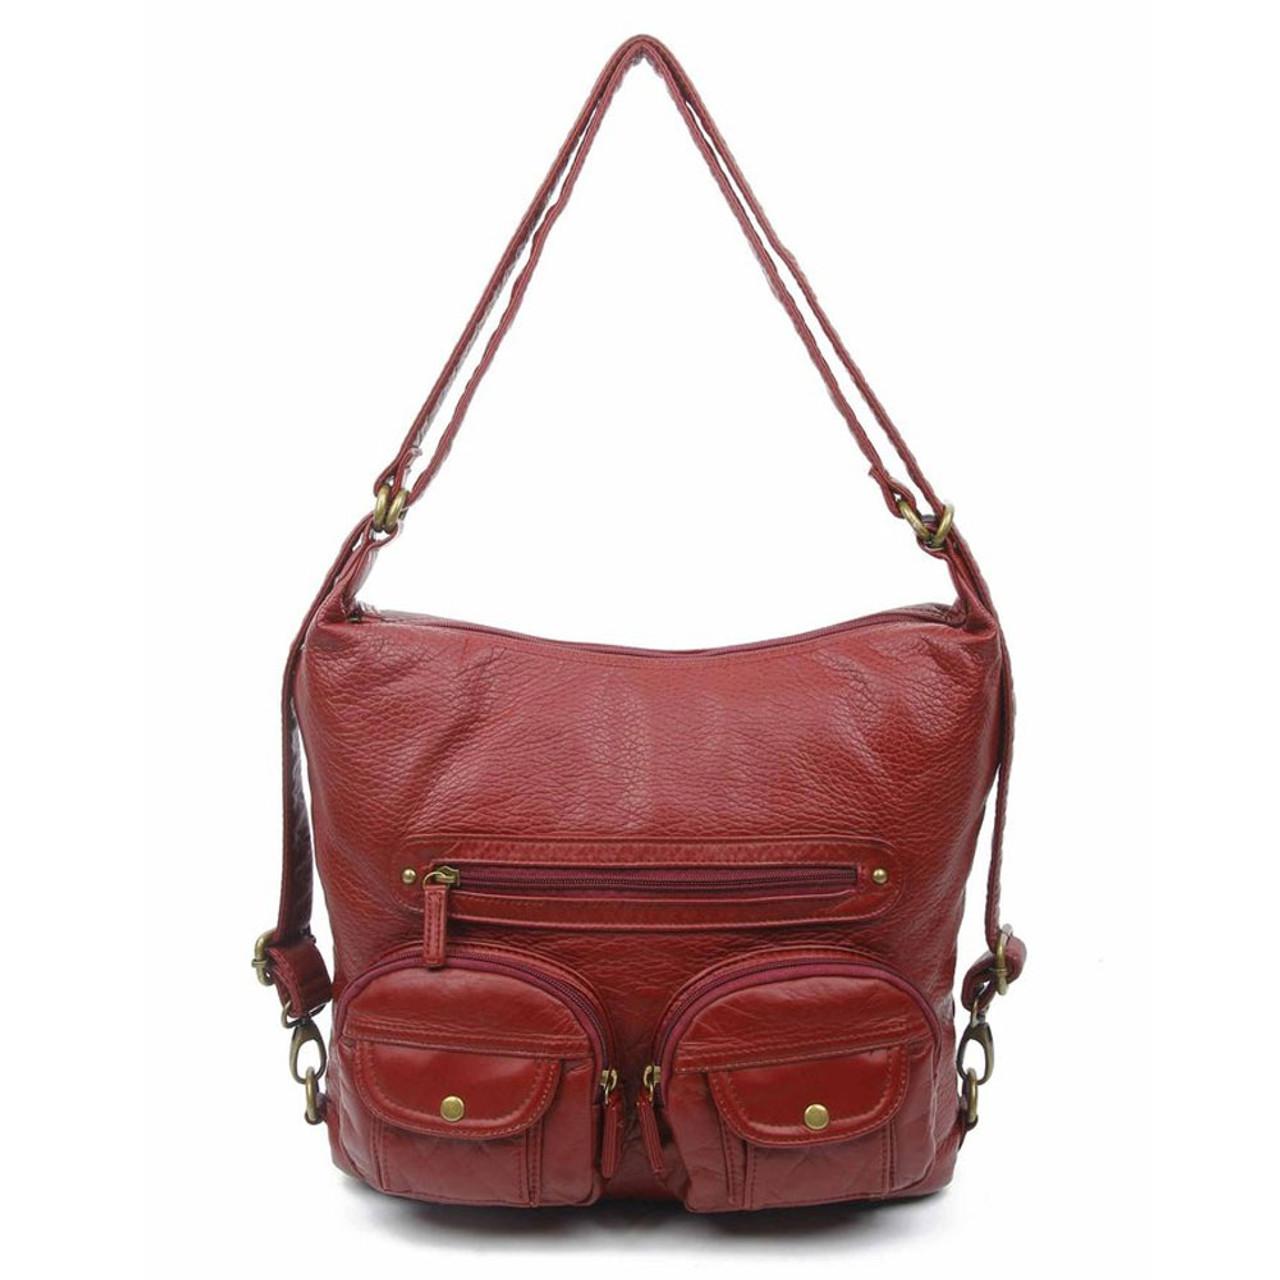  Vegan Leather Handbag Organizer in Cherry Red Color